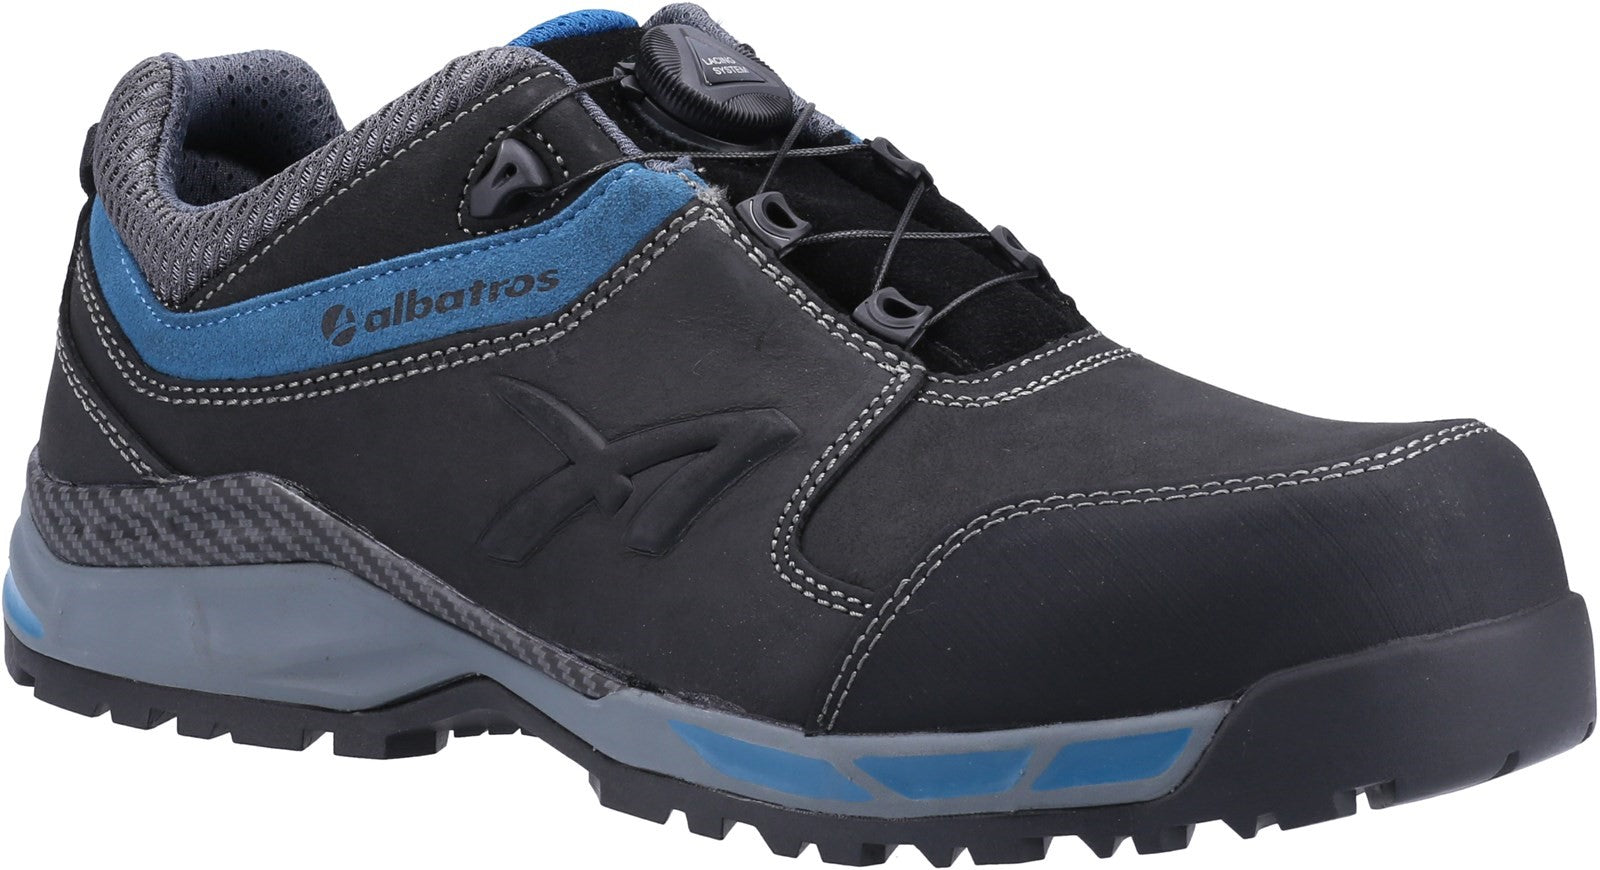 Albatros Tofane Low S3 composite toe/midsole work safety trainer shoes